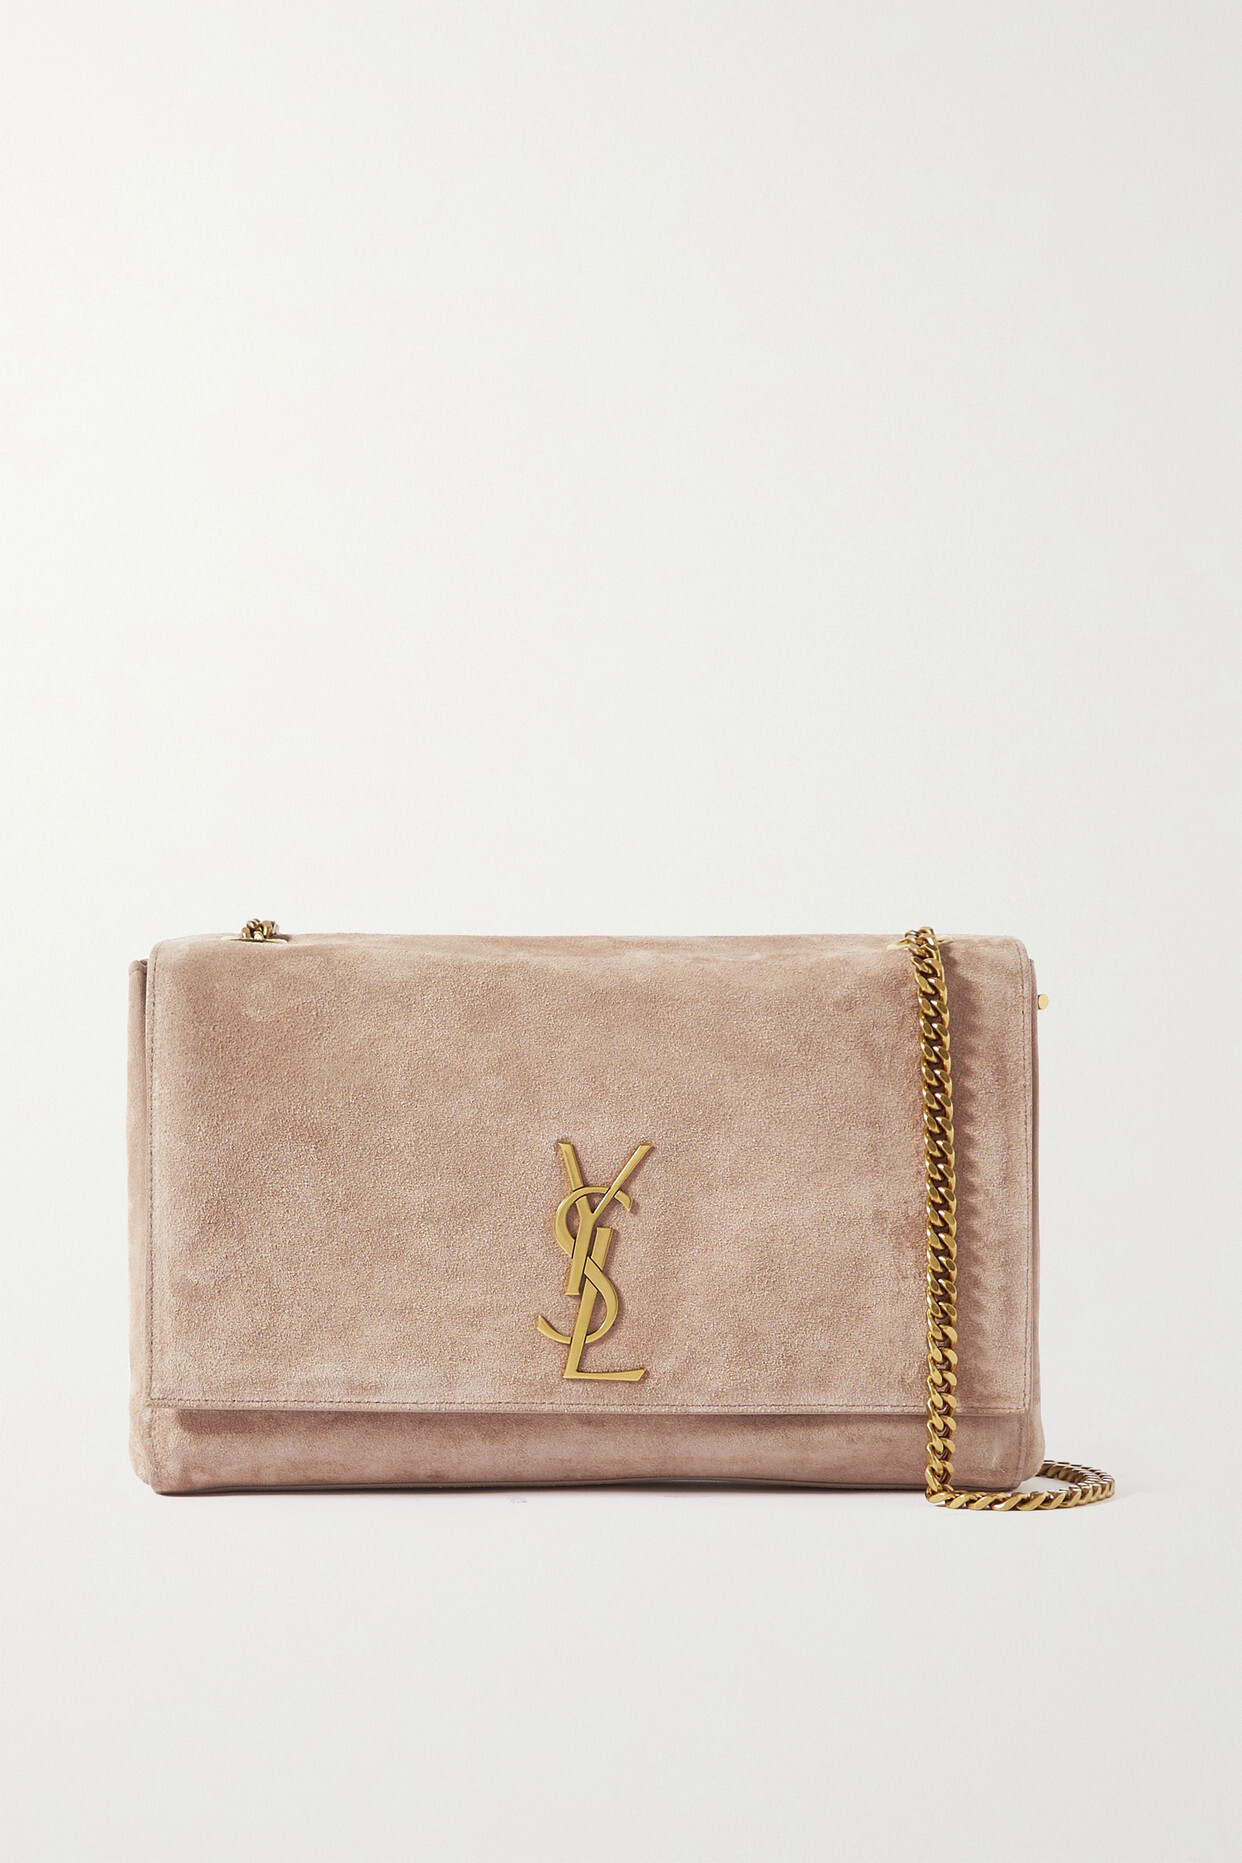 SAINT LAURENT - Kate Reversible Leather And Suede Shoulder Bag - Pink